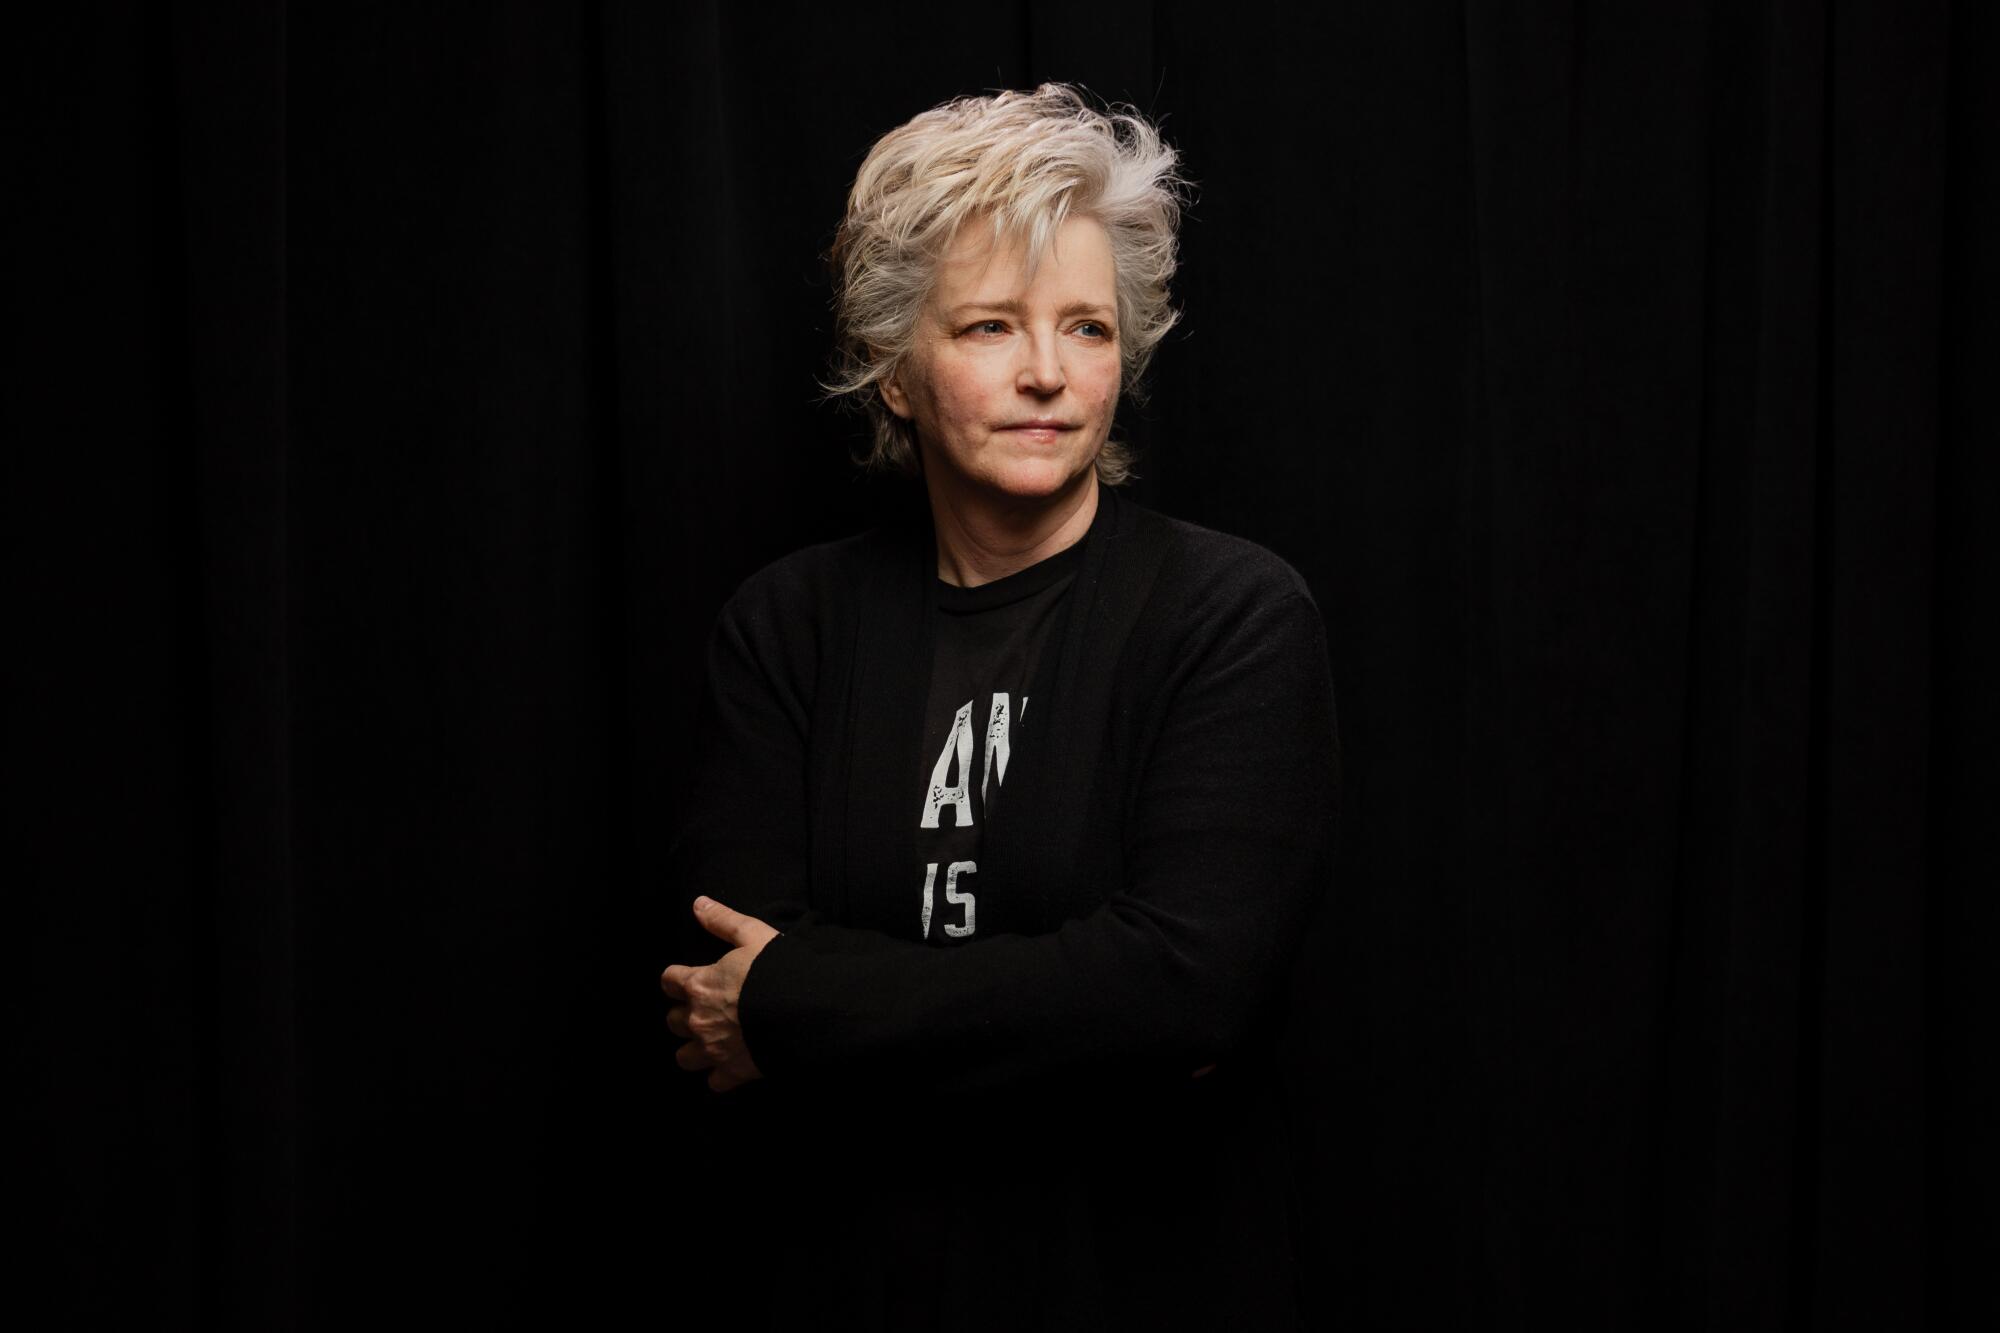 Karin Slaughterher im Porträtstudio der Los Angeles Times 